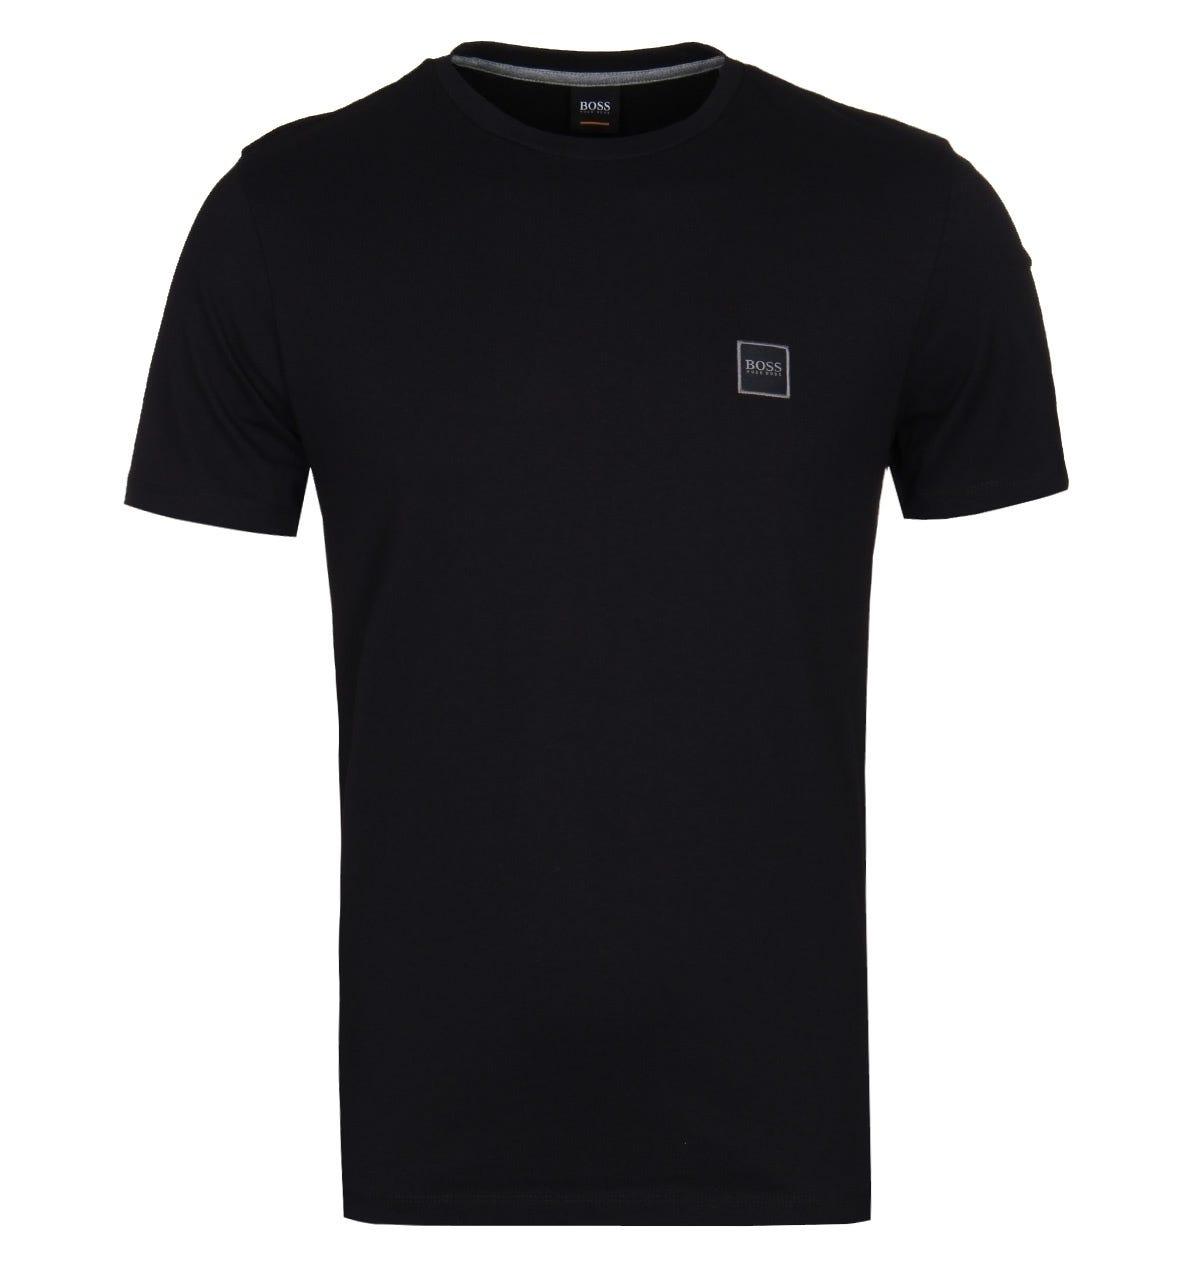 BOSS by Hugo Boss Cotton Tales Black T-shirt for Men - Lyst